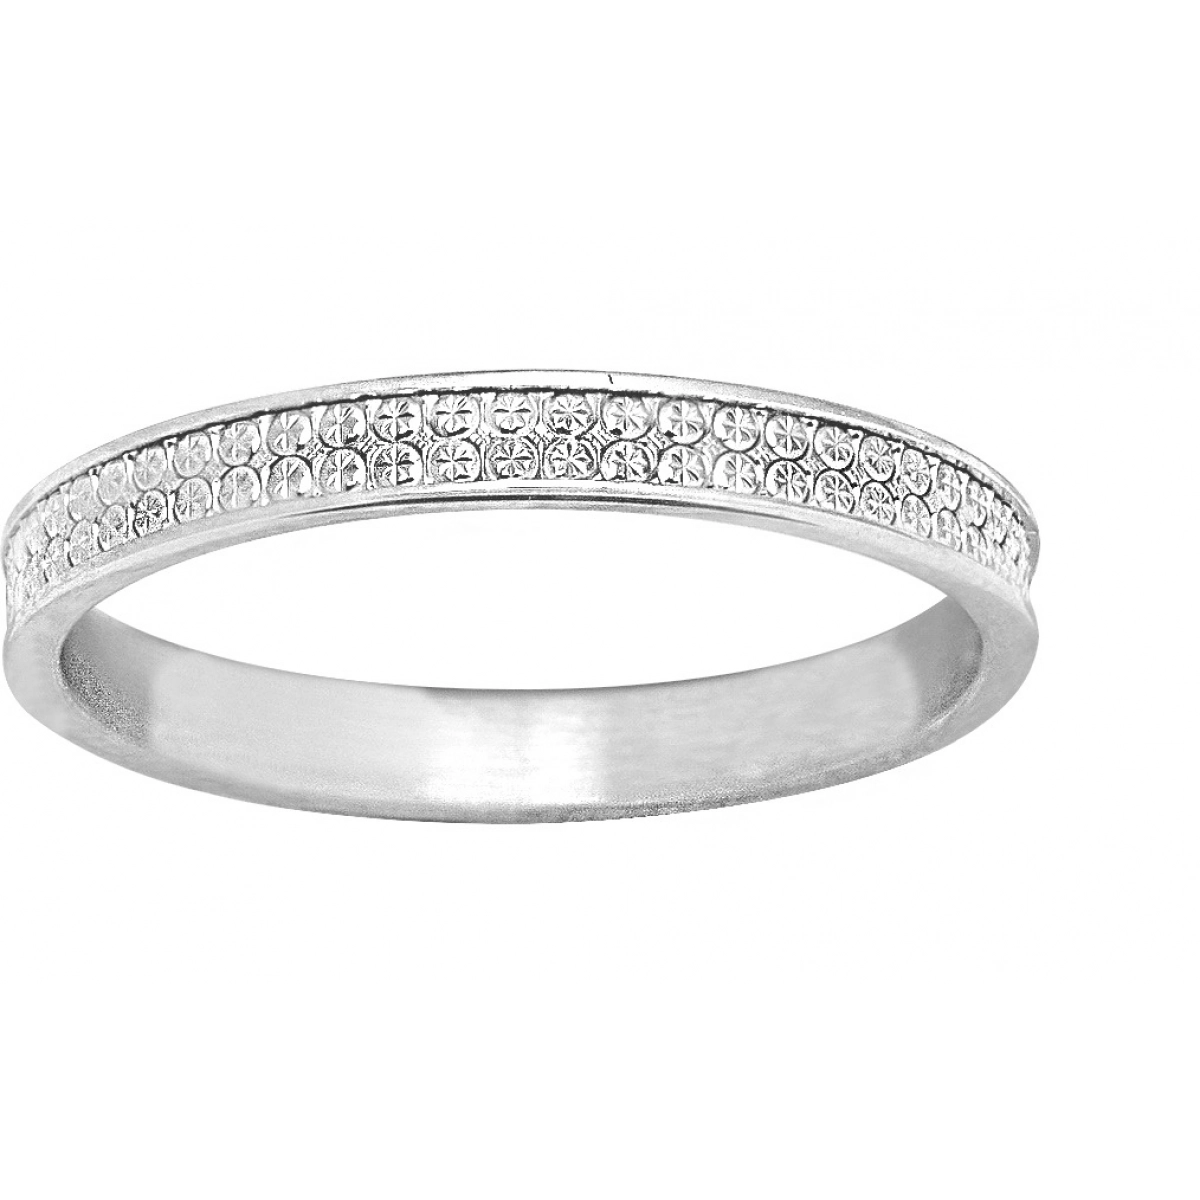 Wedding ring 925 Silver  - Size: 62  Lua Blanca  S37.00225.22